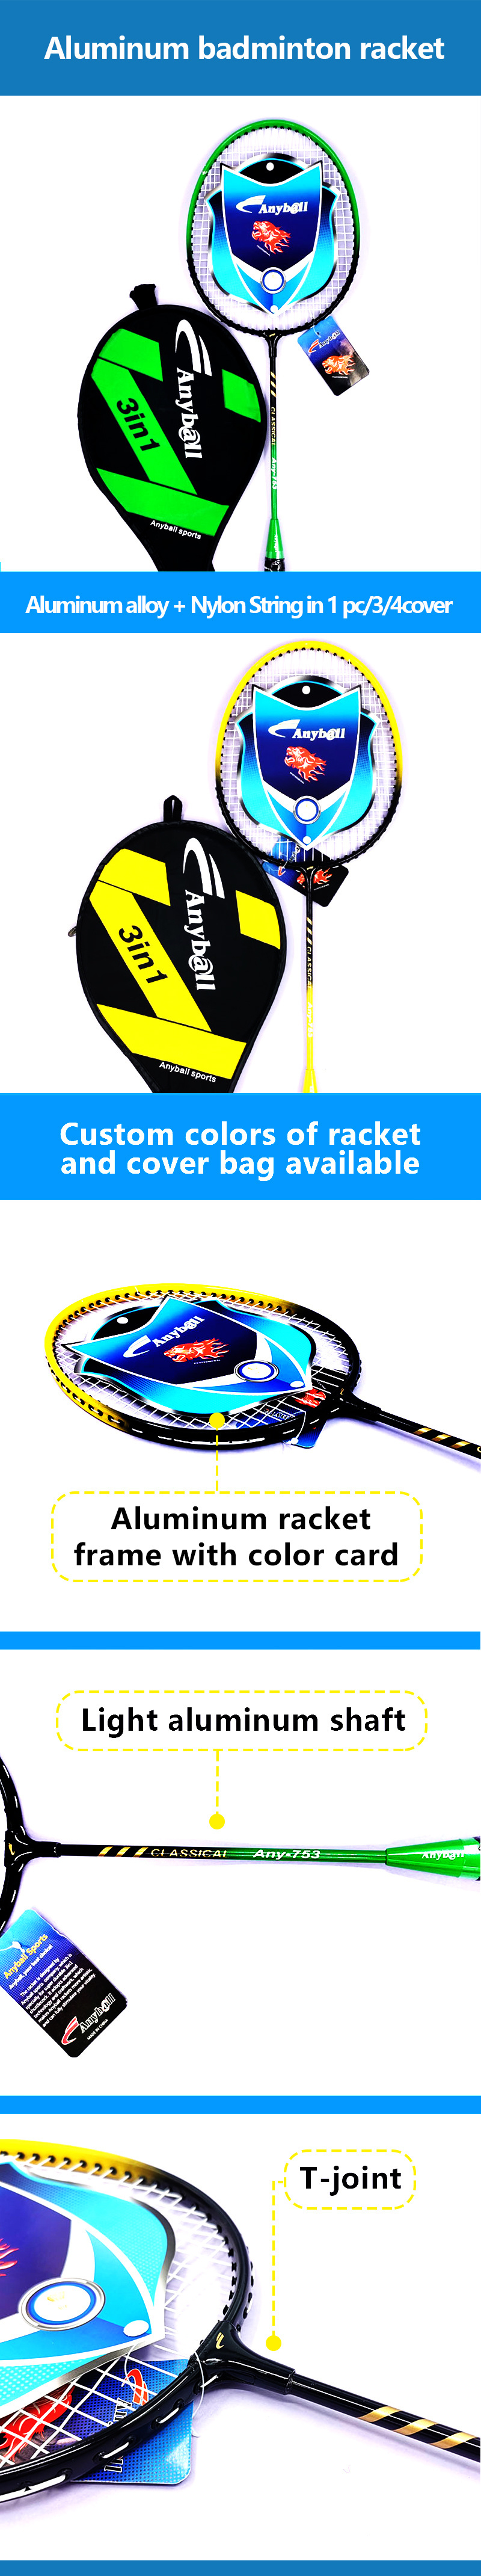 China Original Factory Direct Sale Badminton Racket Aluminum Racket Best Price